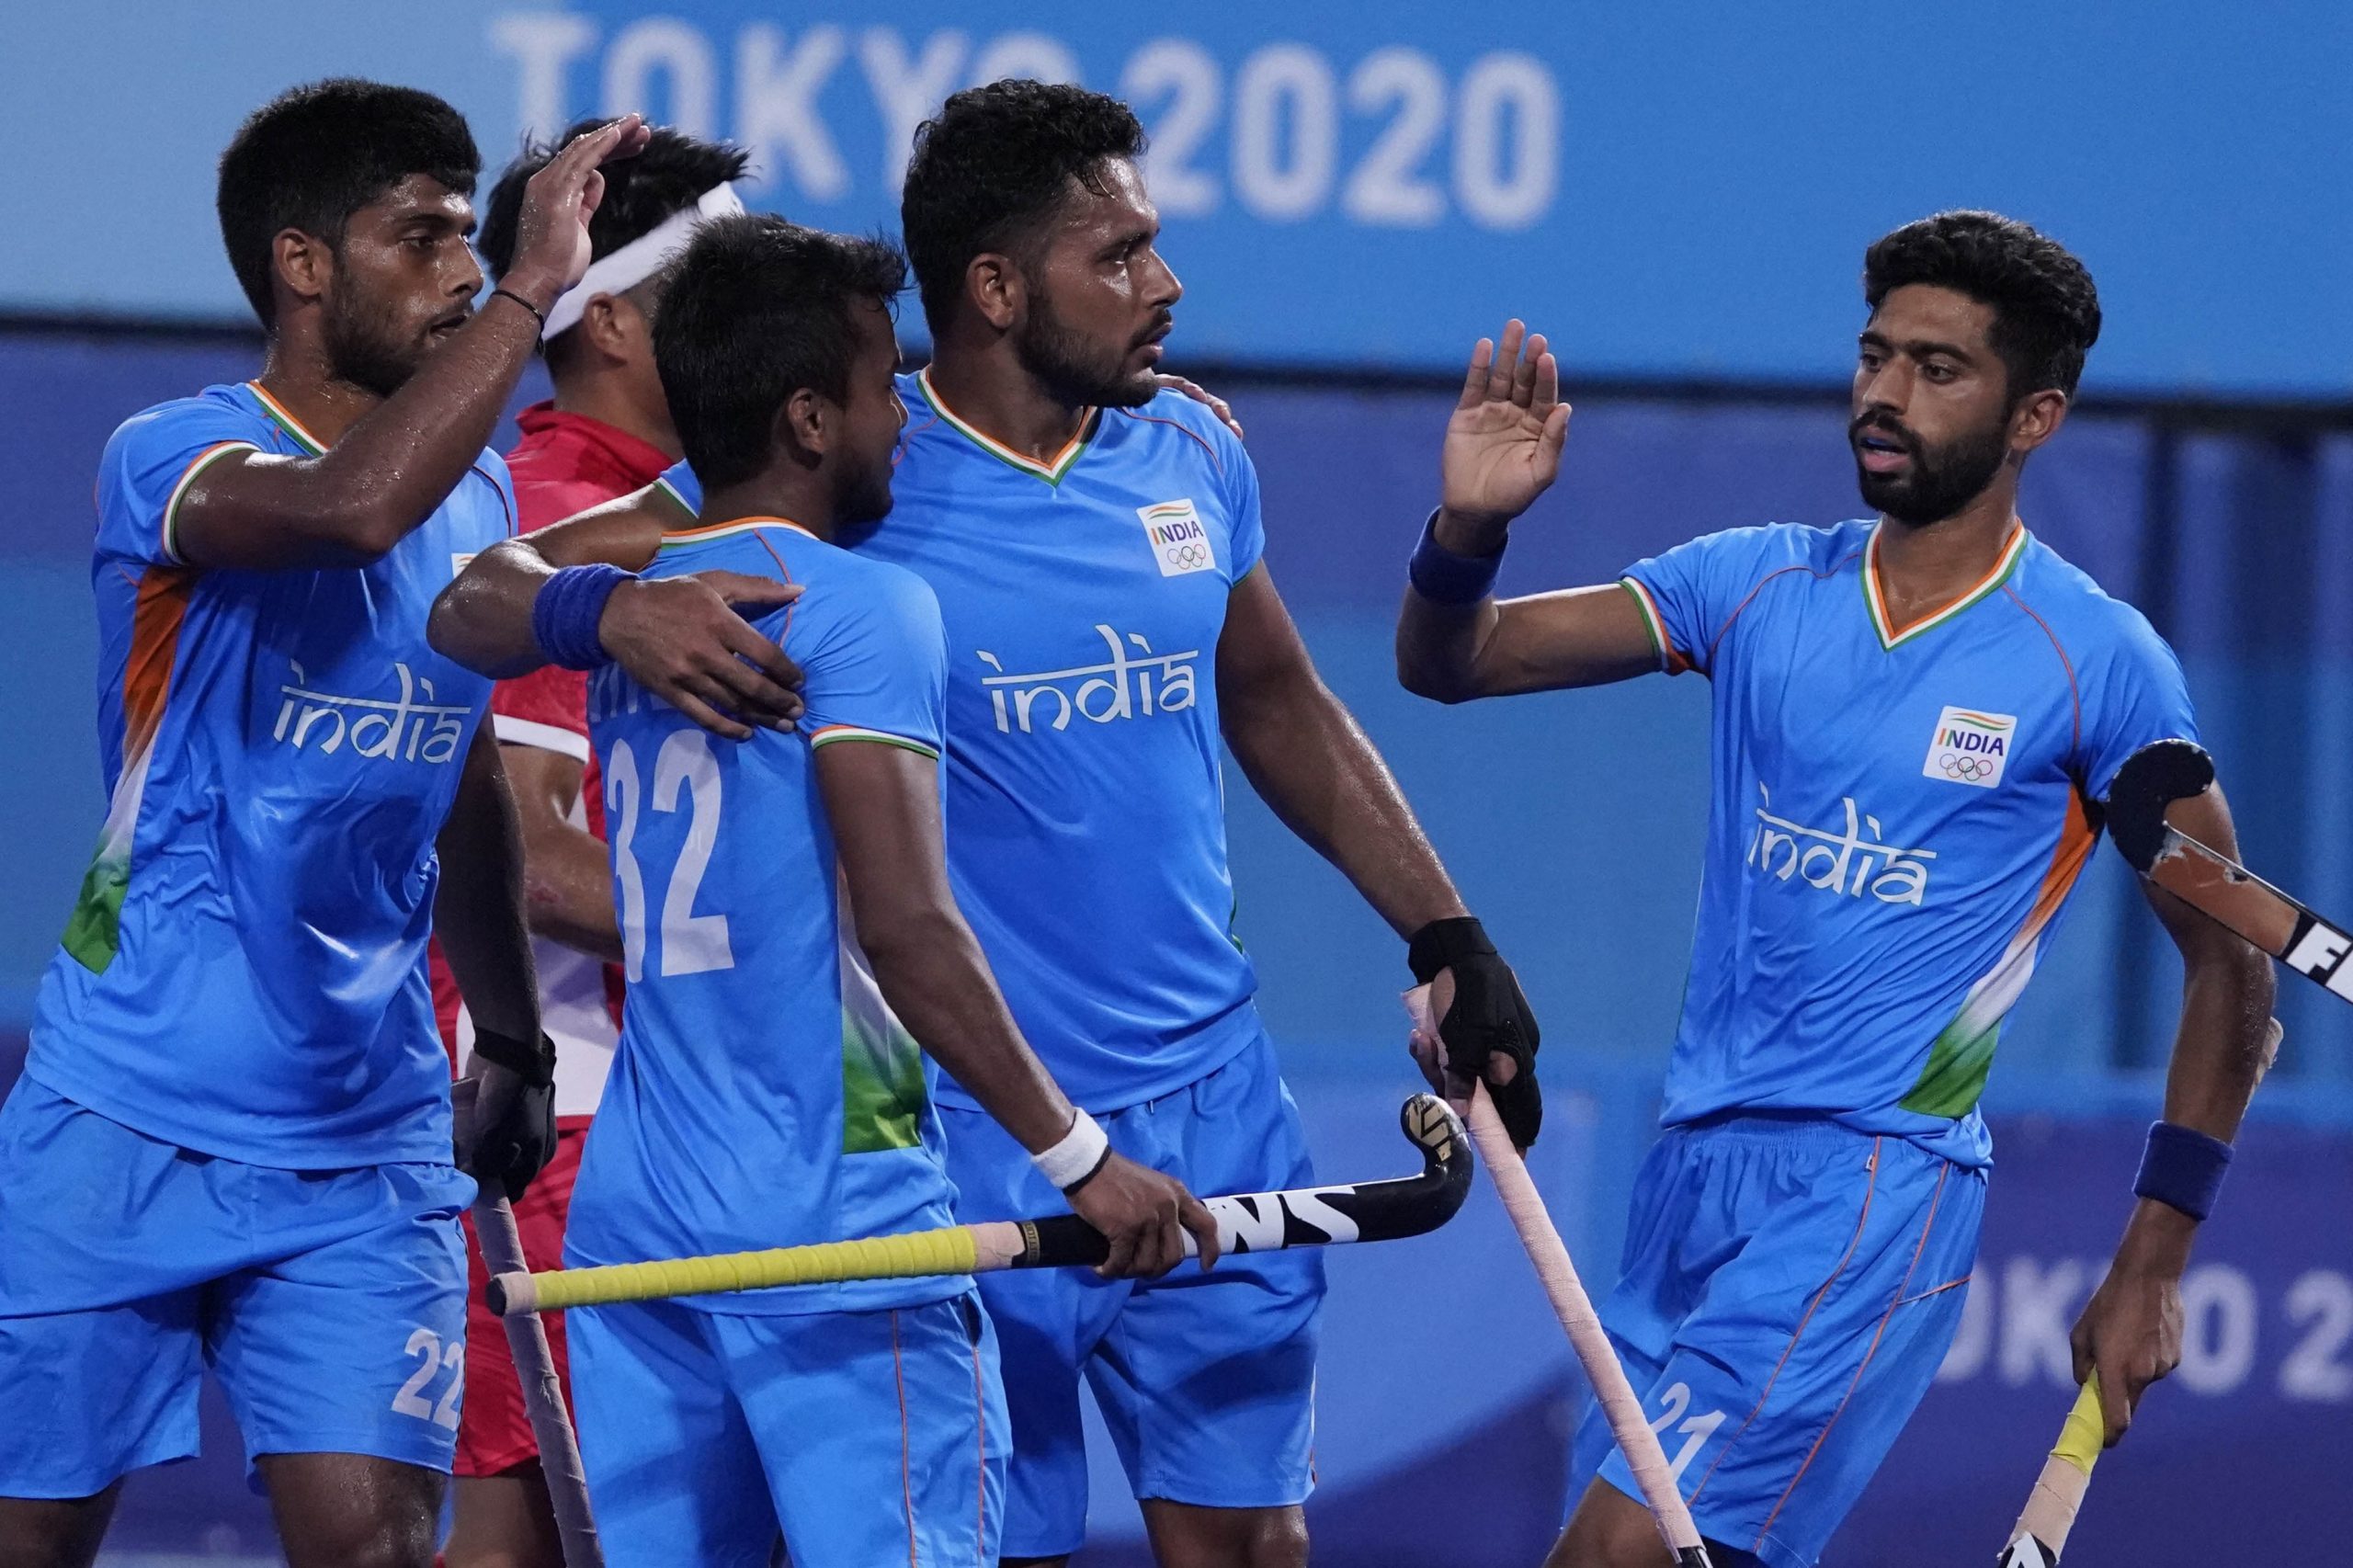 Tokyo Olympics: India beat Japan 5-3 in men’s hockey Pool A match